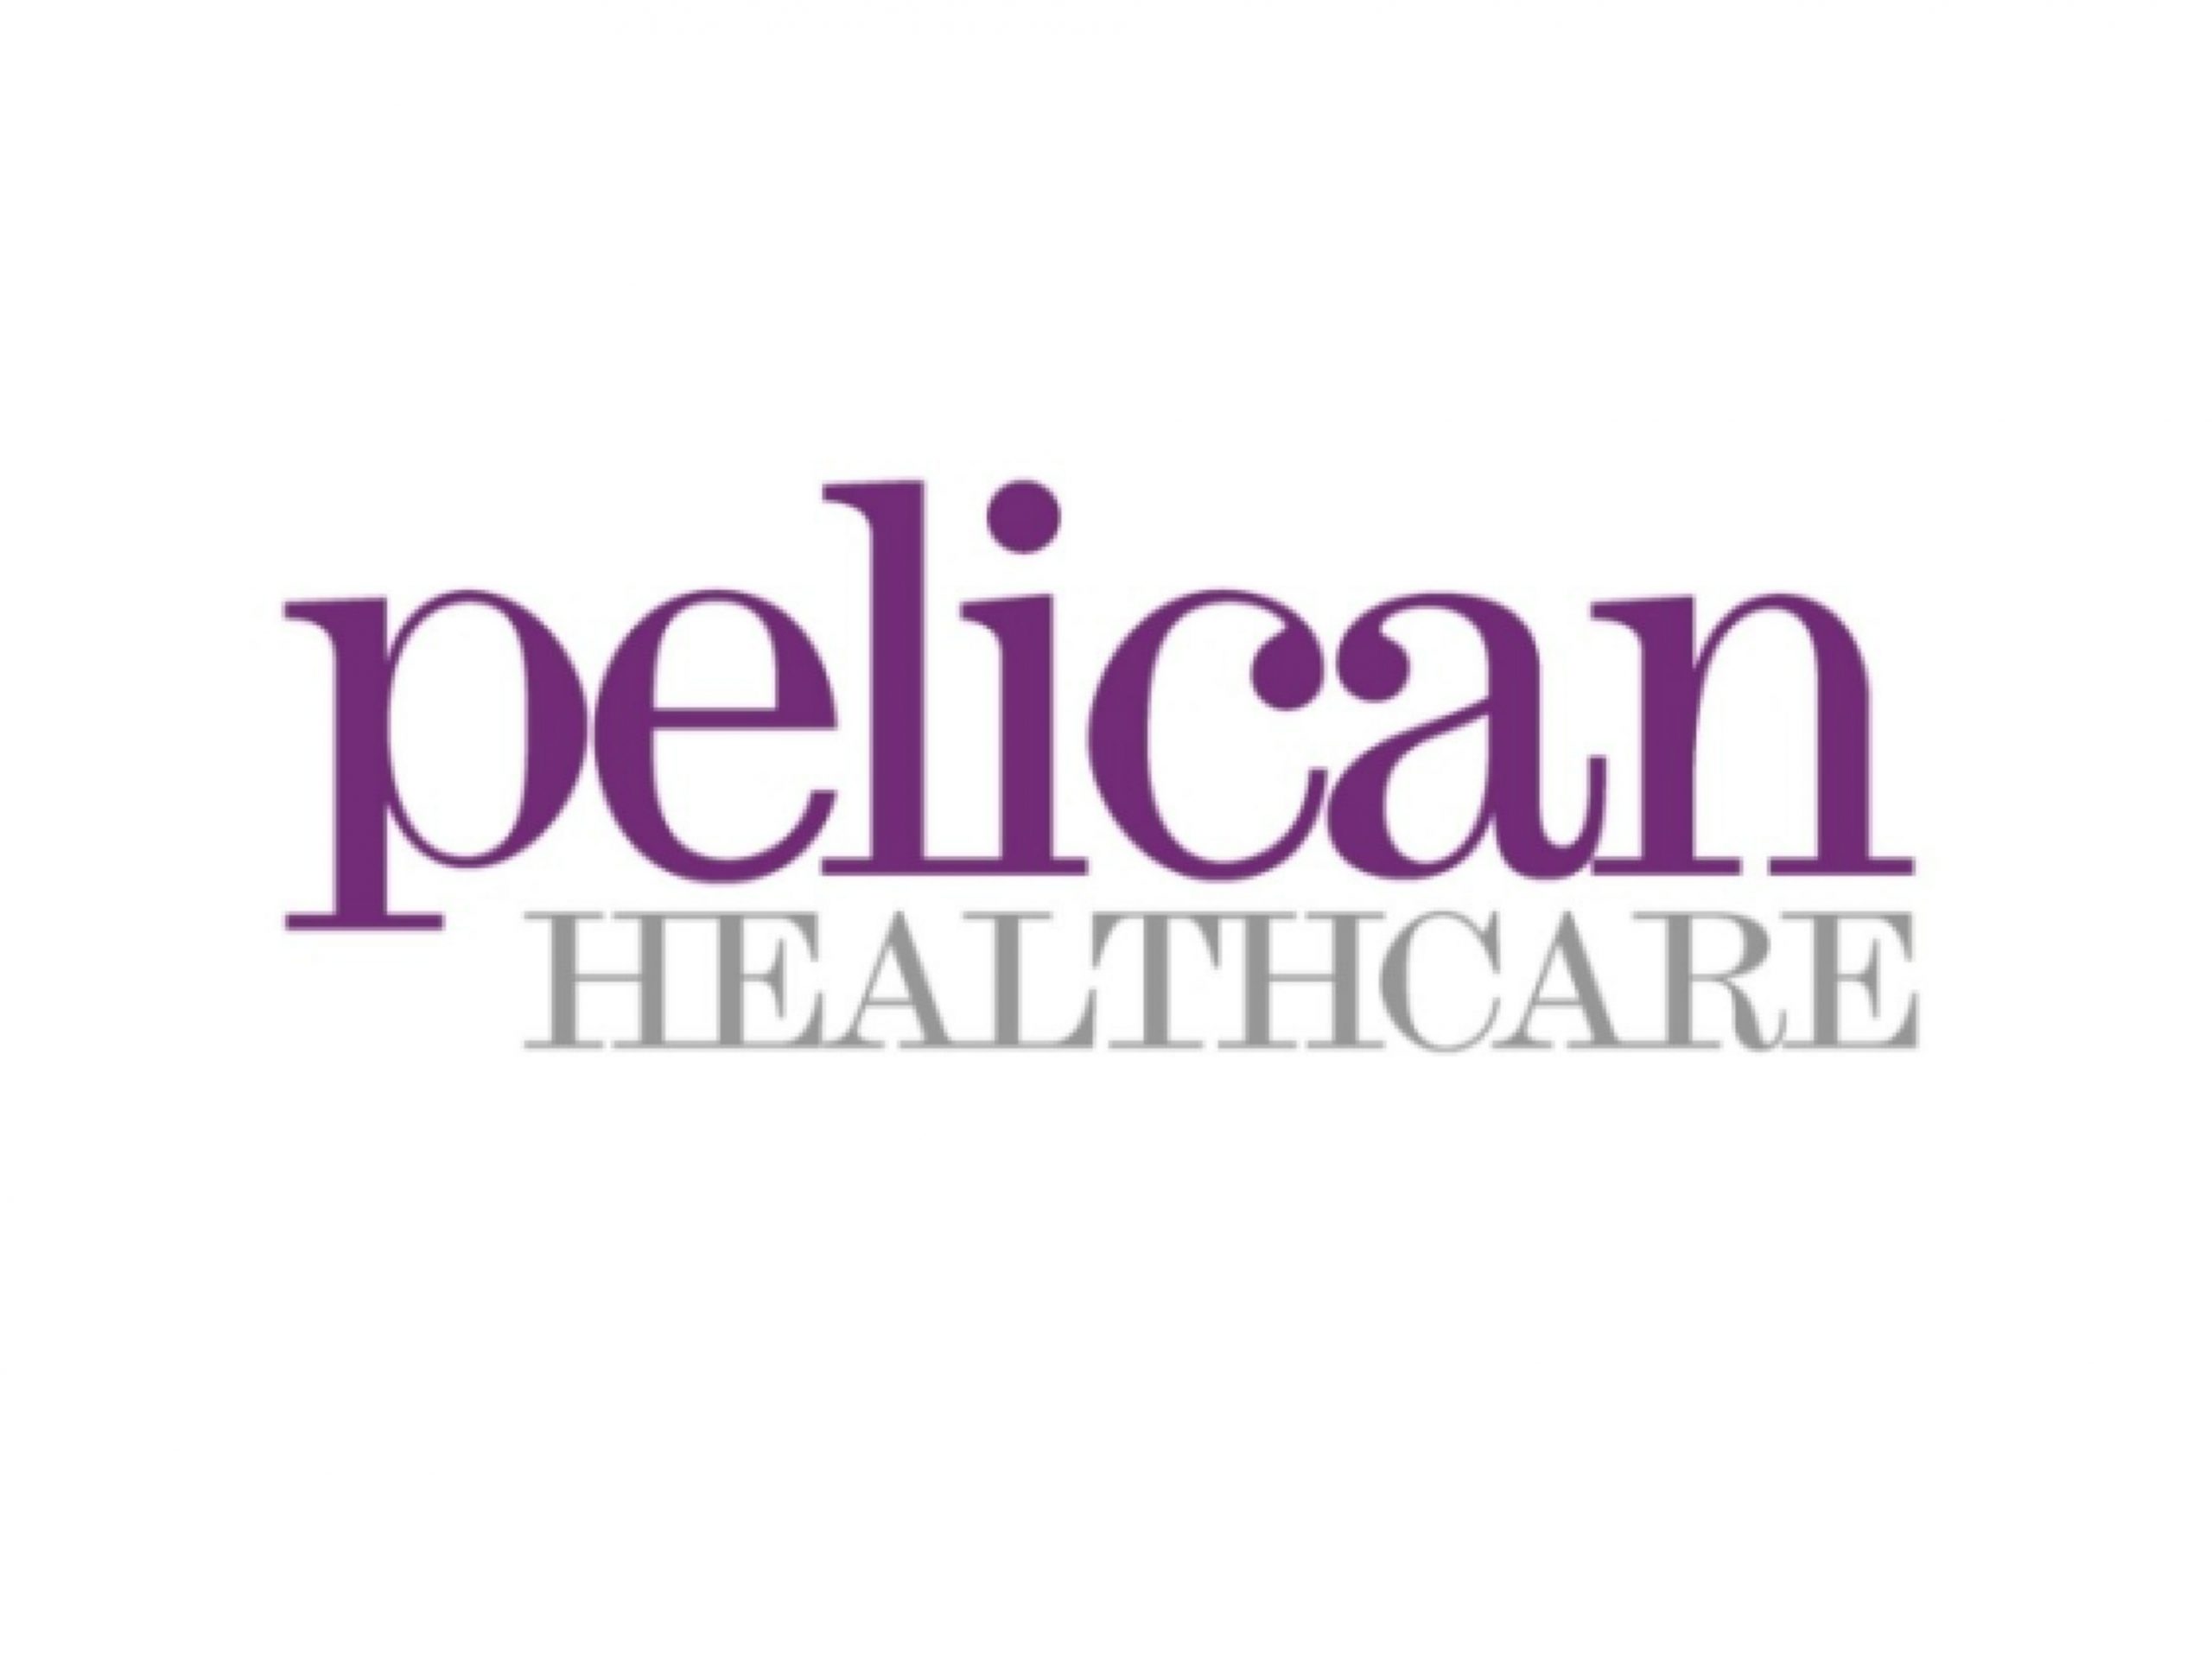 Pelican Healthcare Wins Prestigious International Design Award